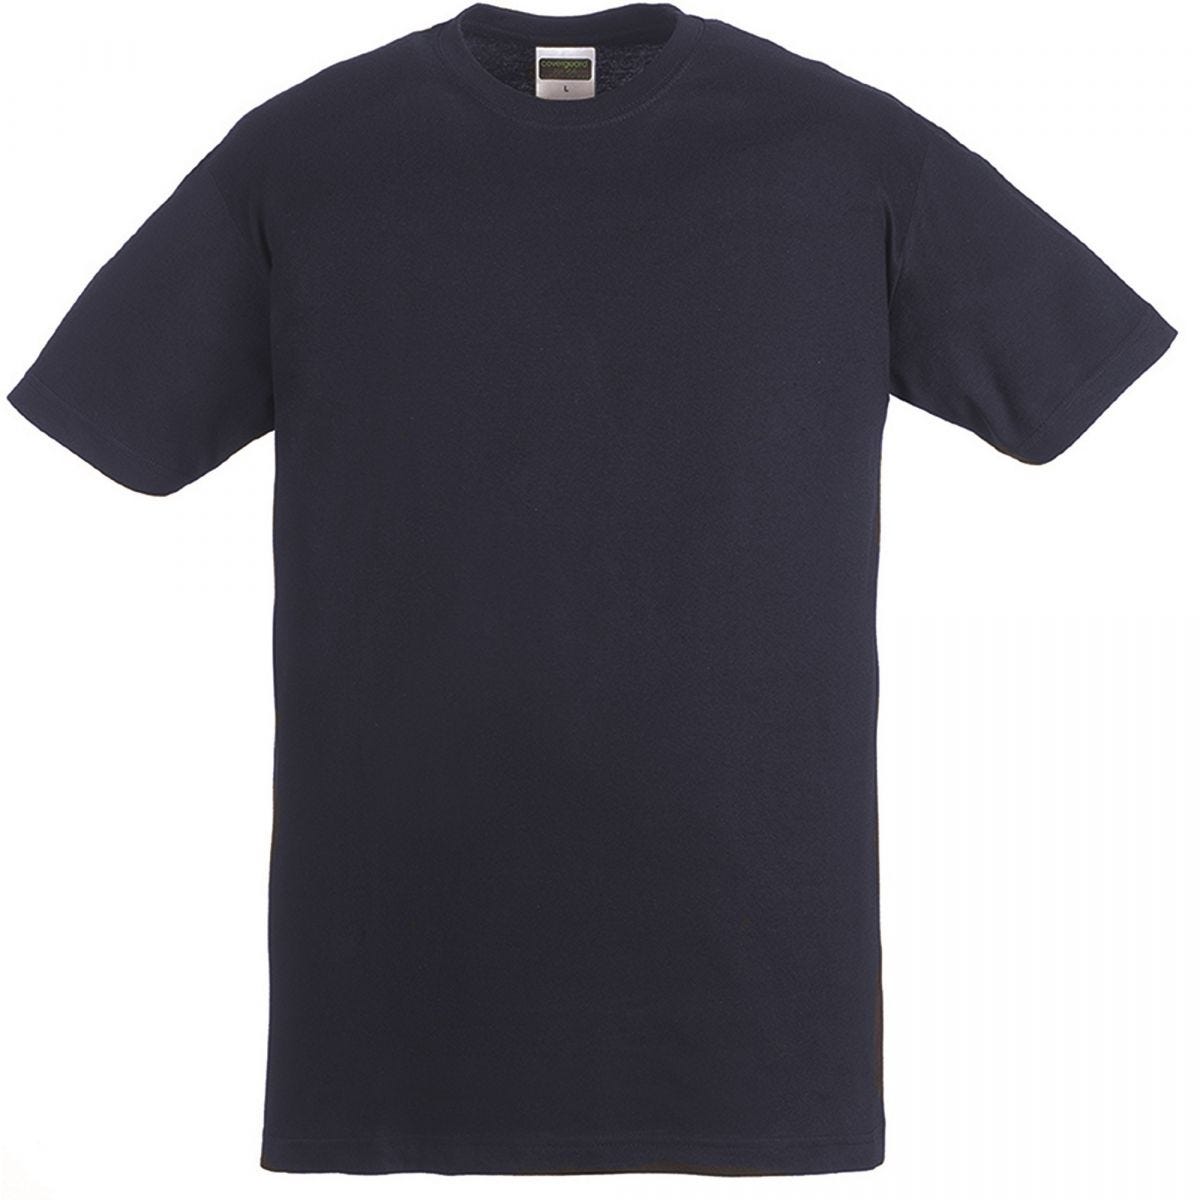 HIKE T-shirt MC marine, 100% coton, 190g/m² - COVERGUARD - Taille 2XL 0